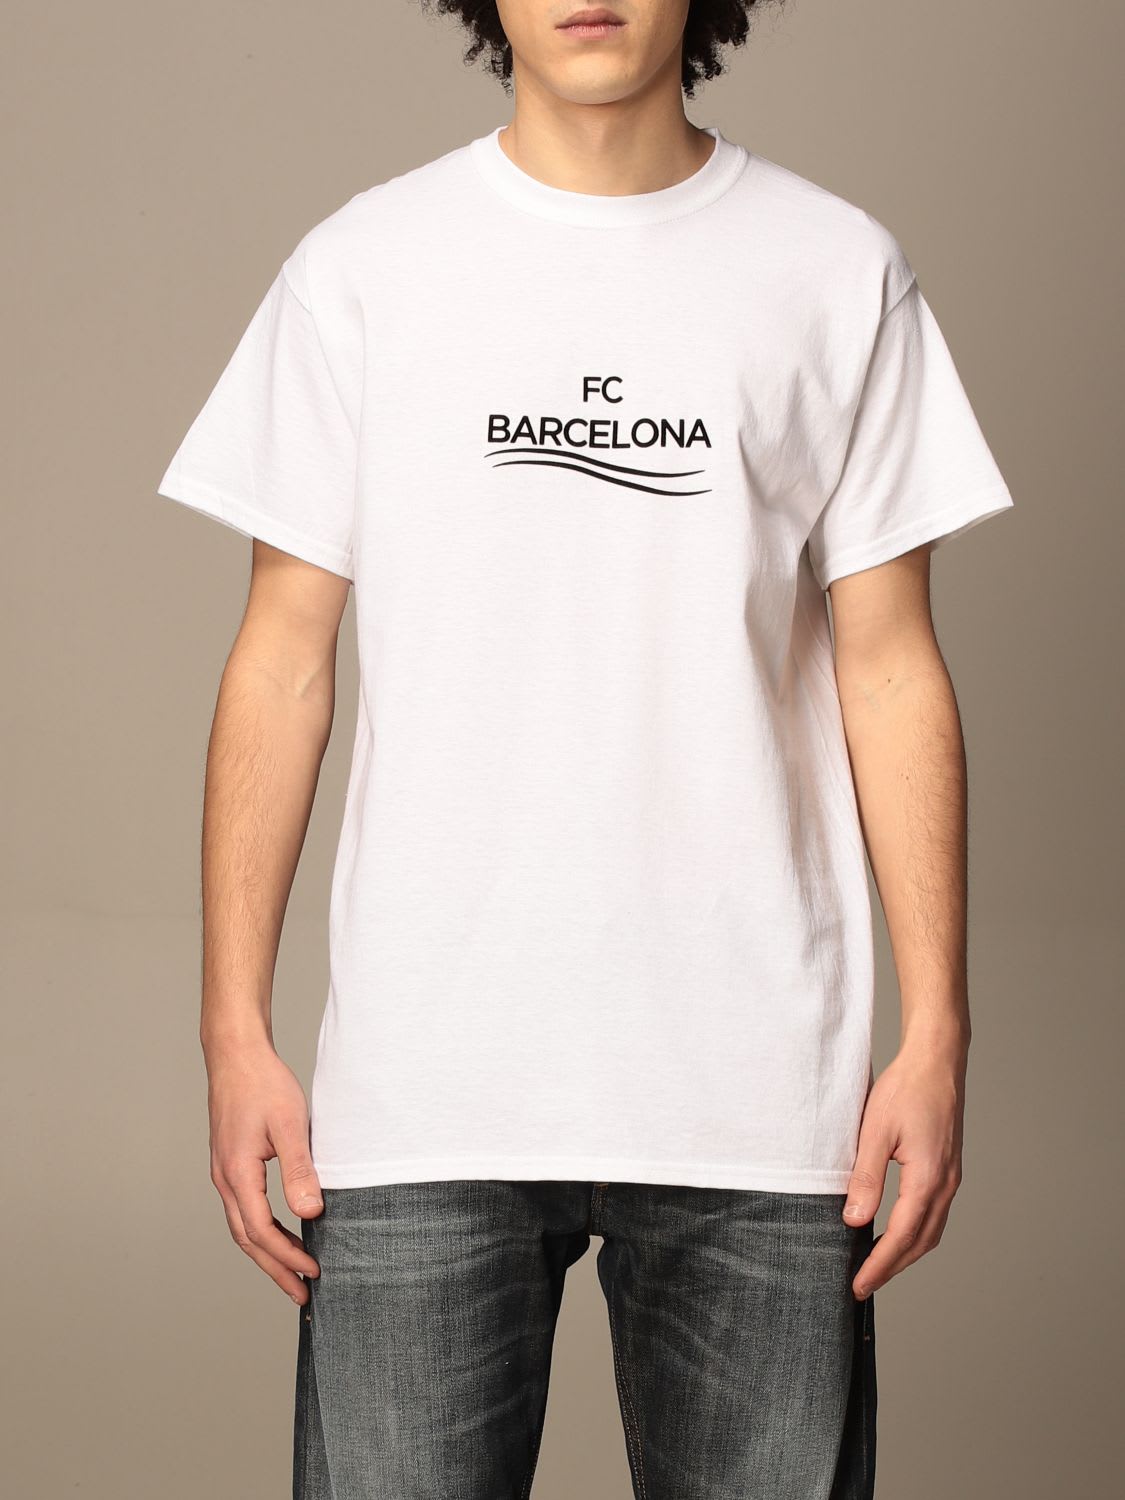 Backsideclub T-shirt Barcelona Backsideclub Cotton T-shirt